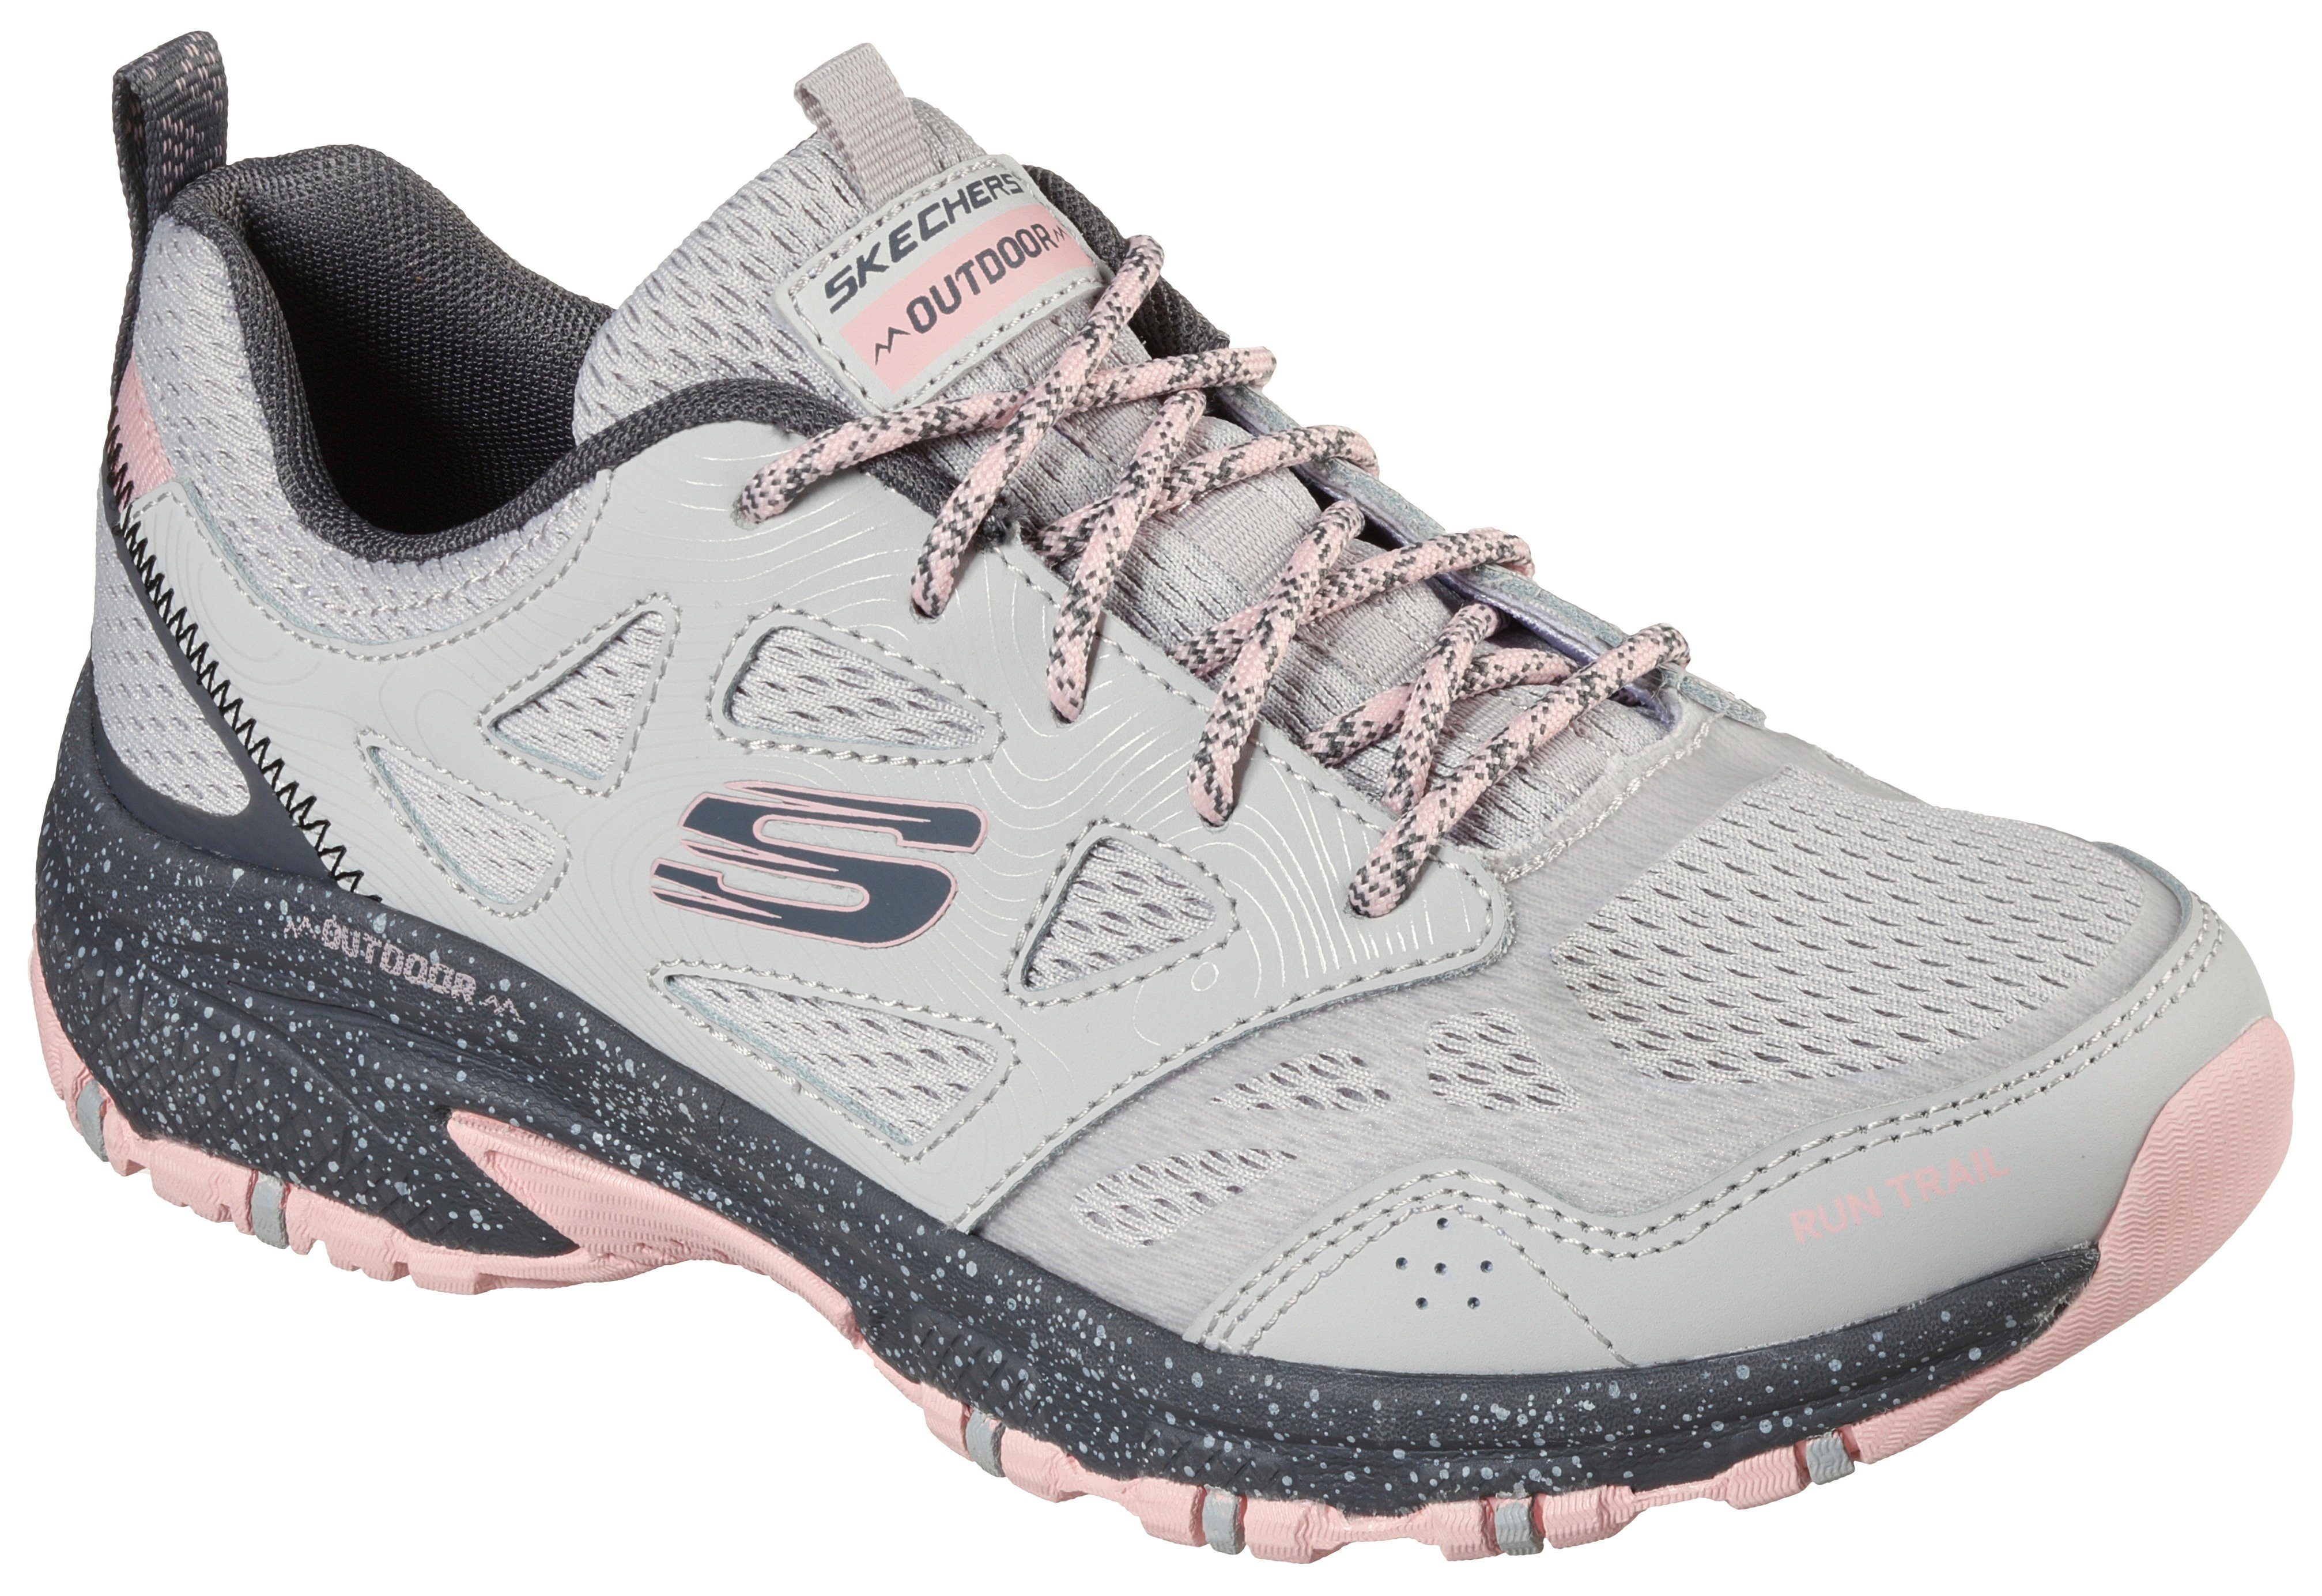 Sneaker HILLCREST ESCAPADE grau-pink Skechers Materialmix PURE im